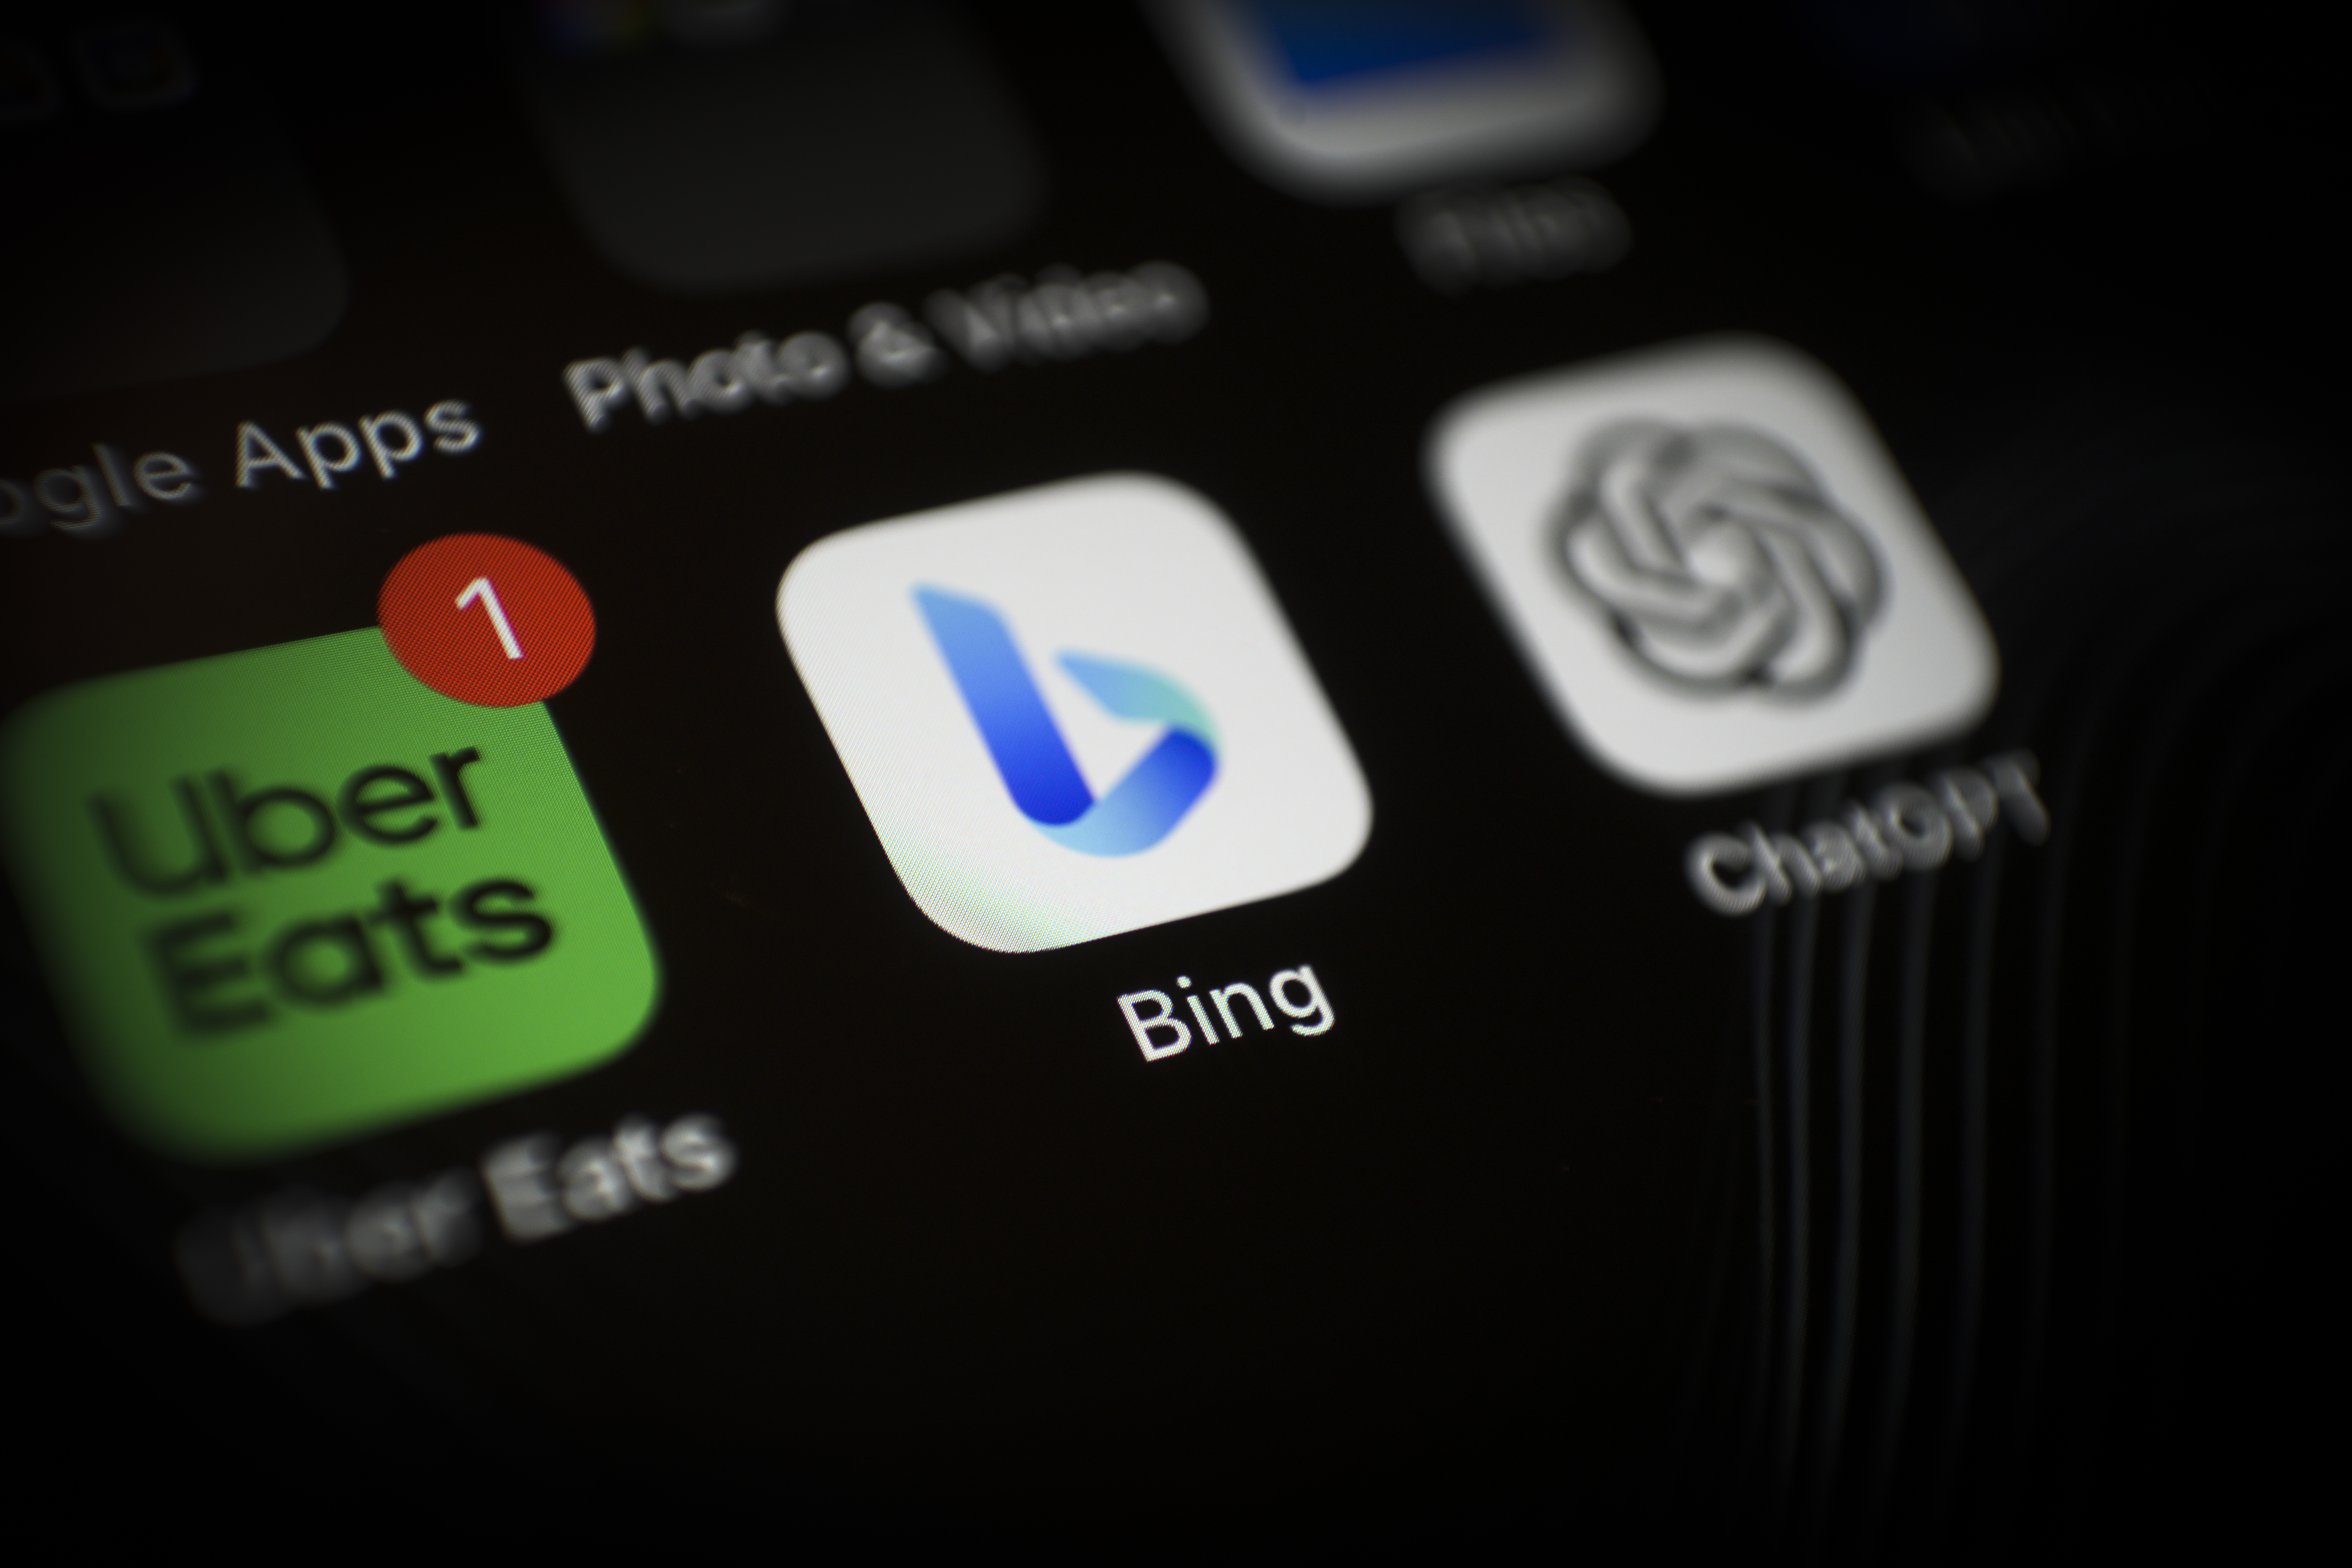 Search: Bing is not making progress despite Microsoft's efforts on AI